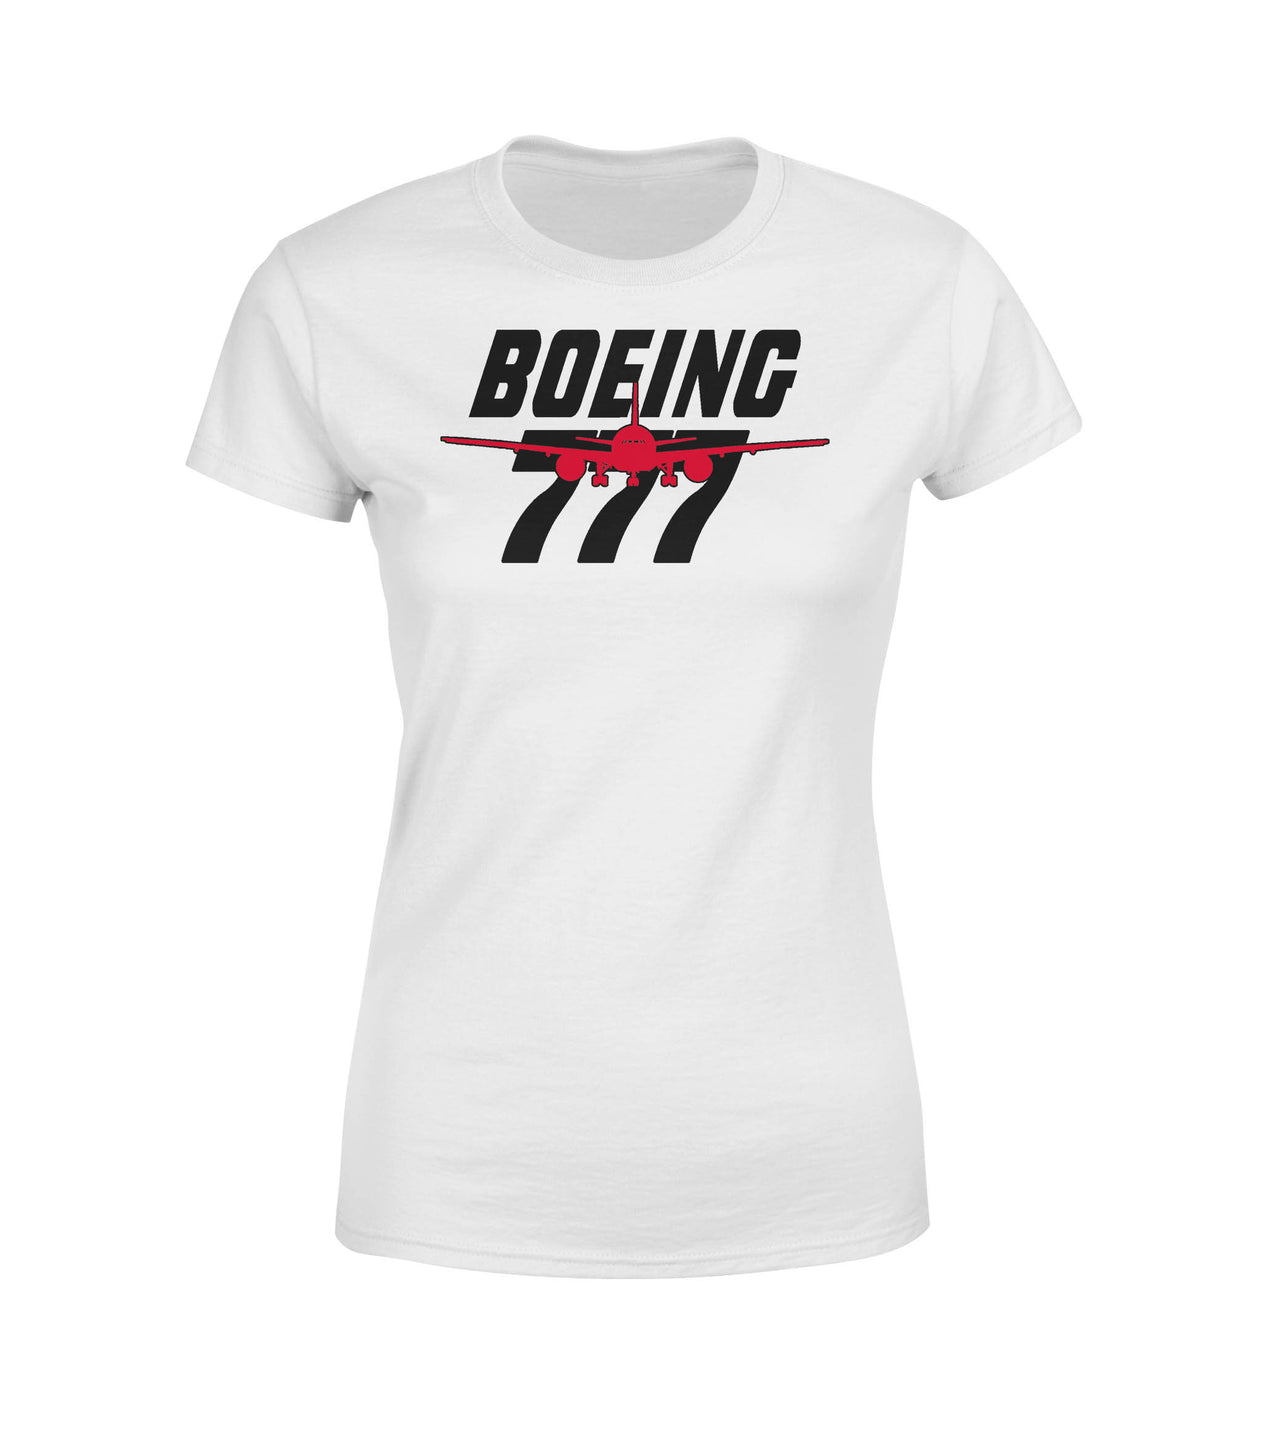 Amazing Boeing 777 & Text Designed Women T-Shirts